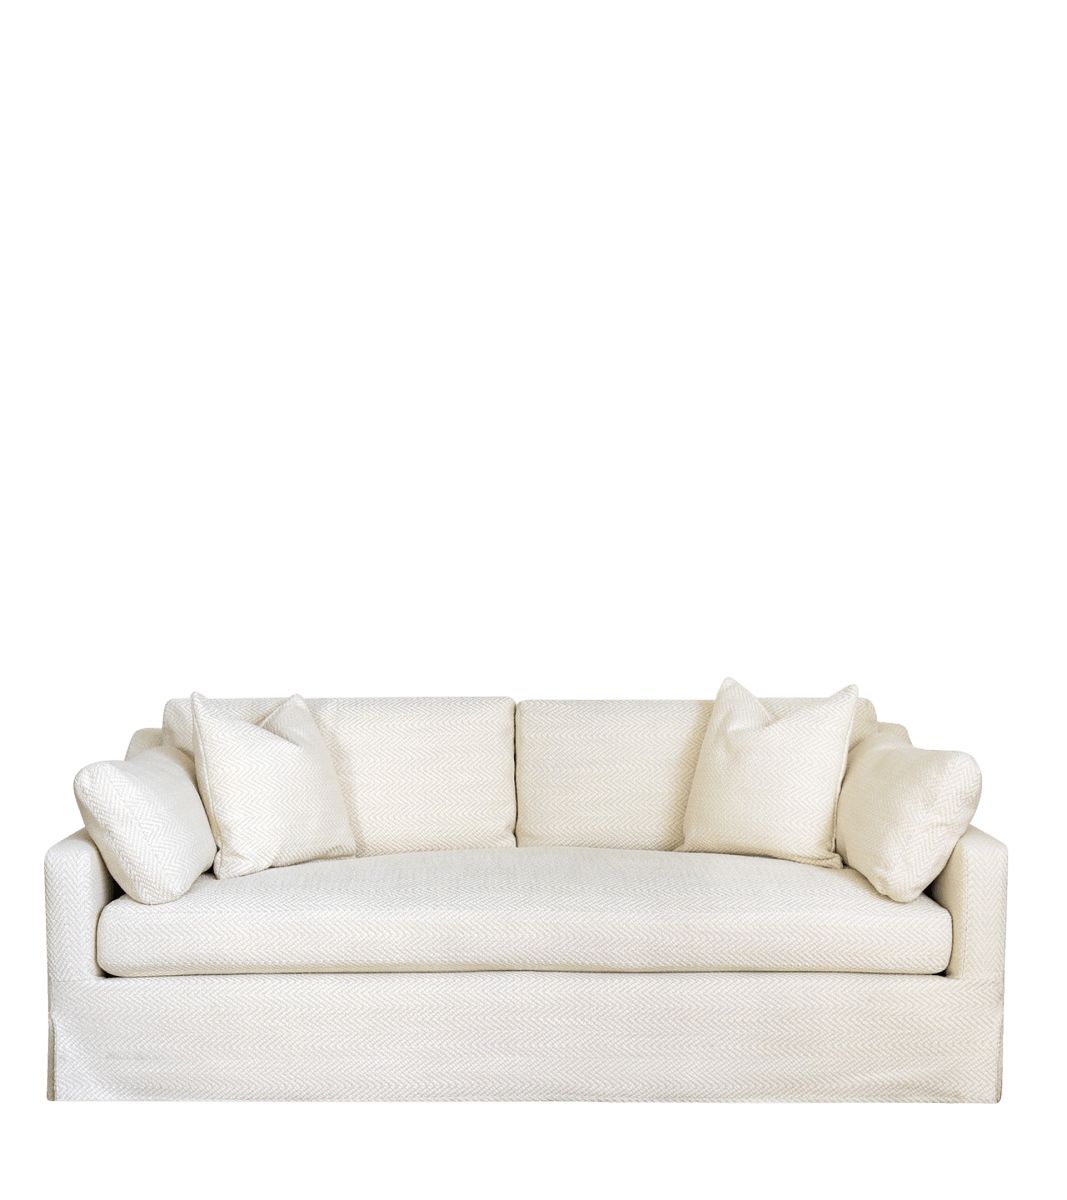 Bernard 8' Sofa - Cream | OKA US